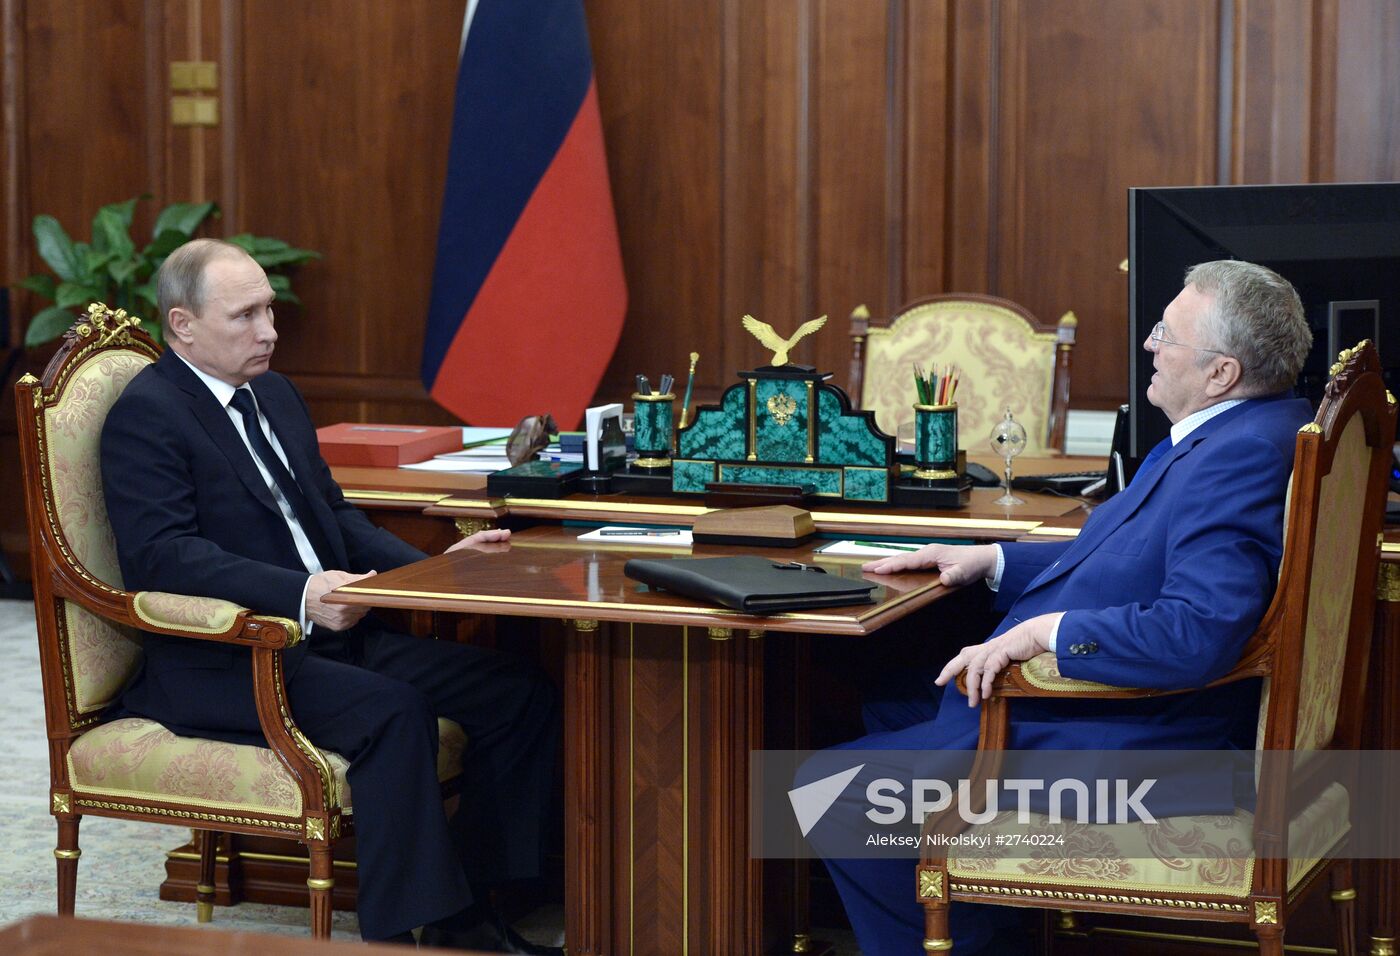 President Vladimir Putin meets with Liberal Democratic Party leader Vladimir Zhirinovsky